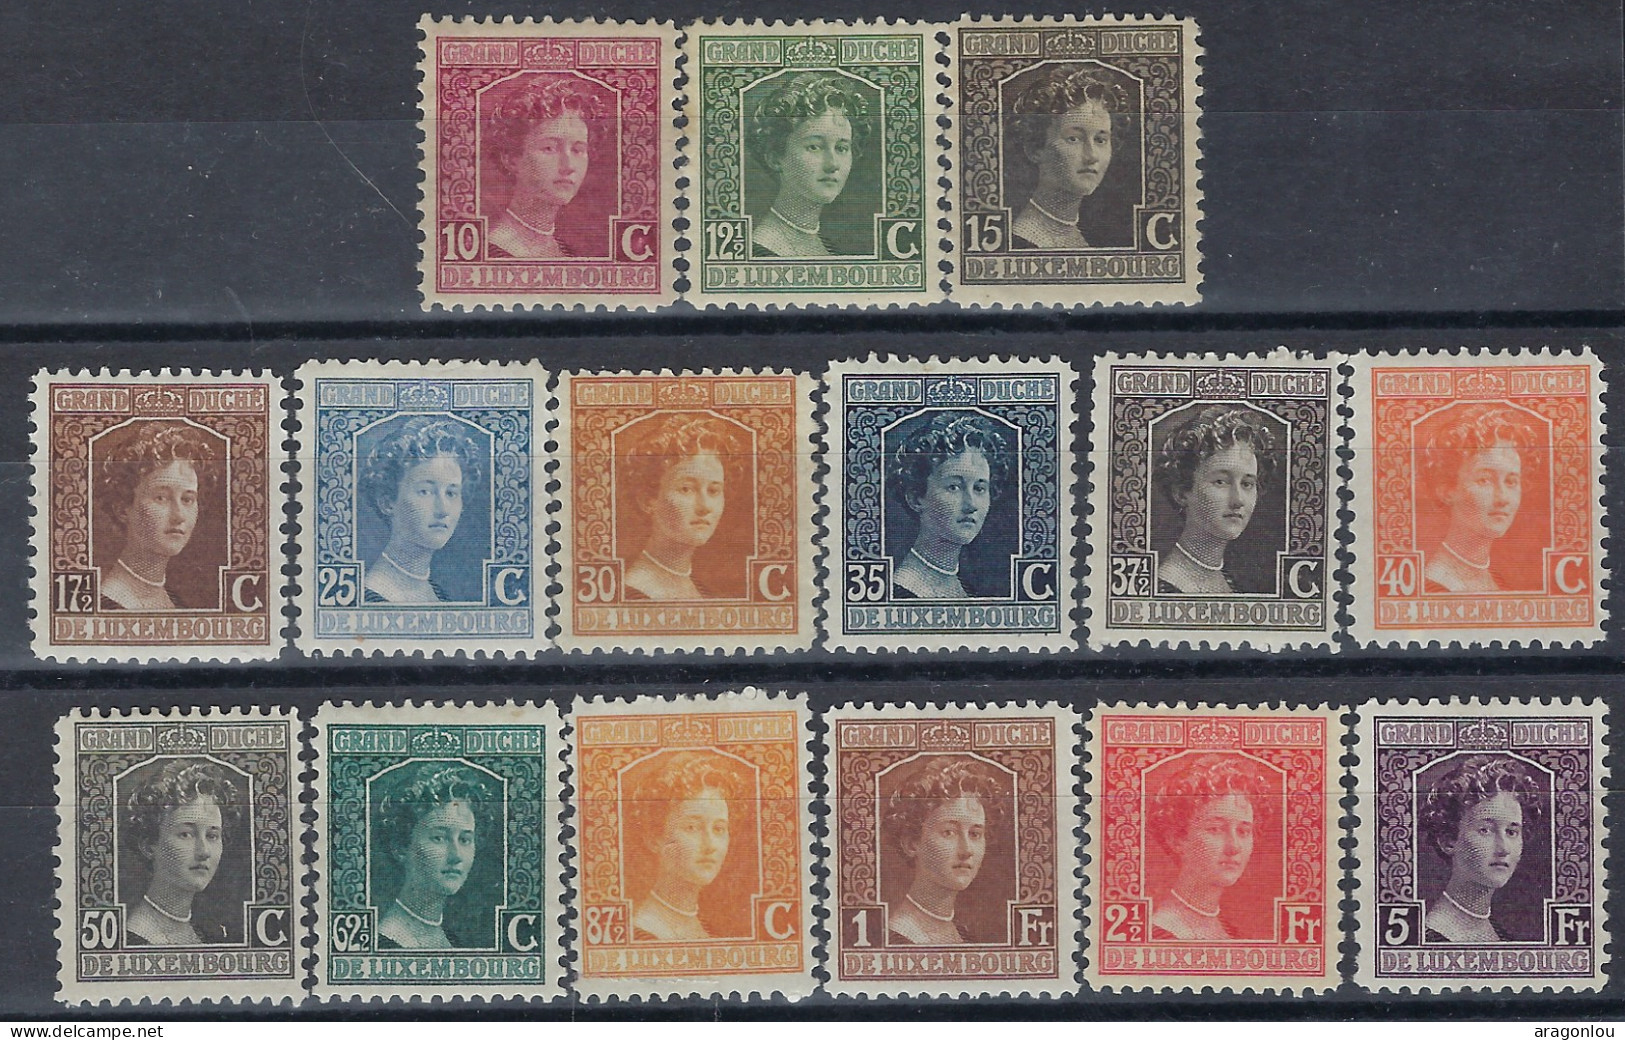 Luxembourg - Luxemburg - Timbre  1914   Marie-Adélaïde   Série   * - 1914-24 Marie-Adélaida